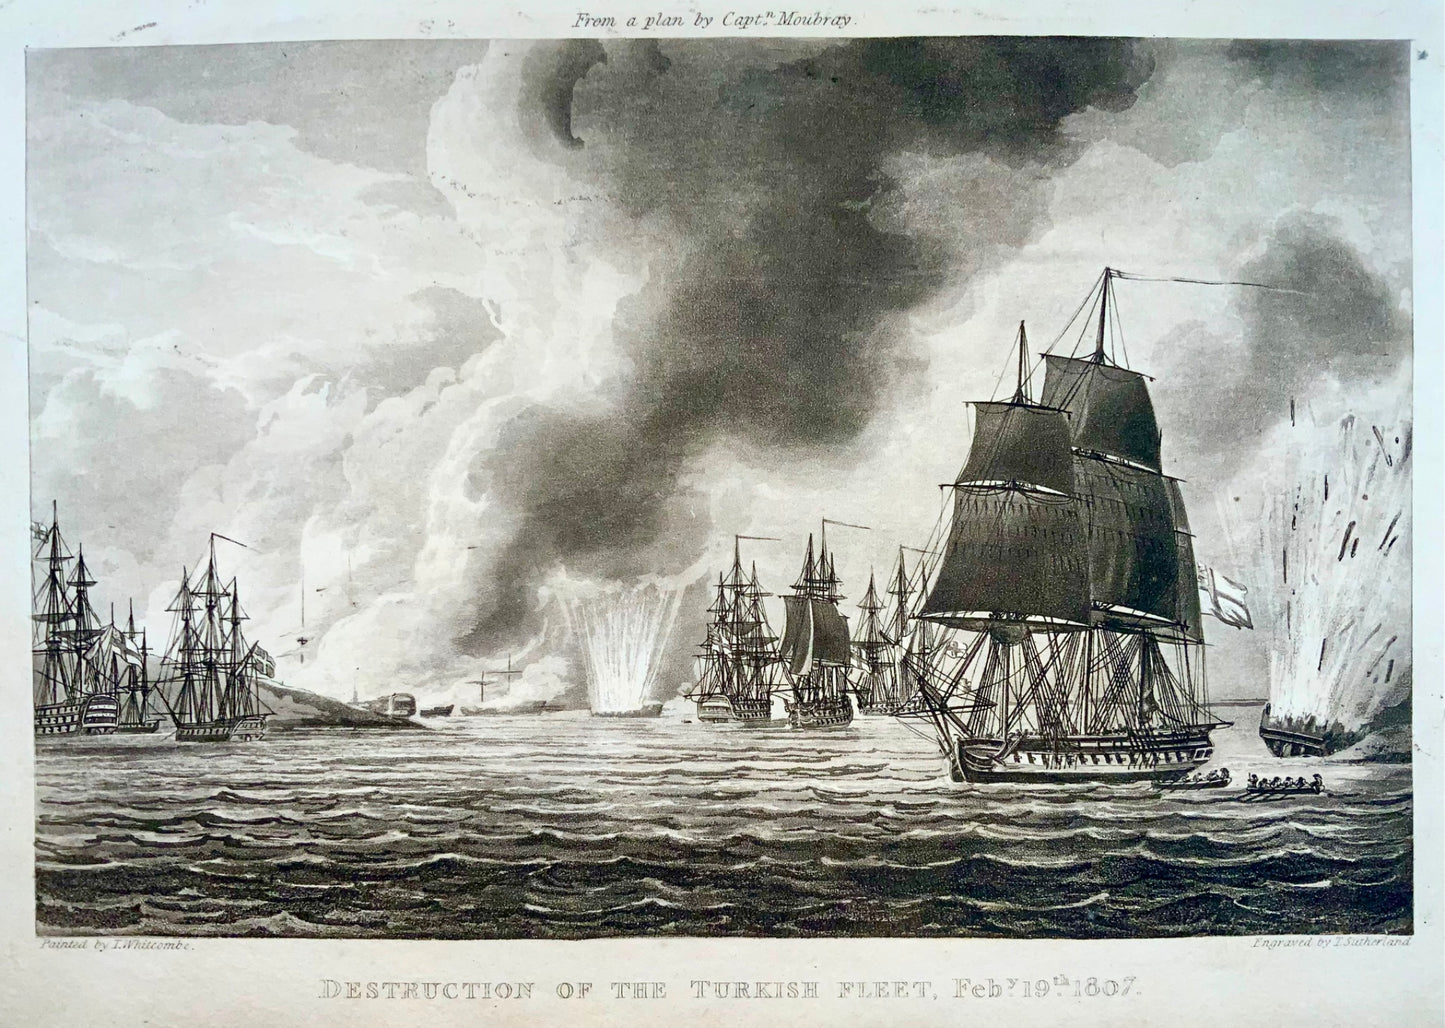 1820 Sutherland, Operazione Dardanelli, Flotta navale turca, incisione marittima